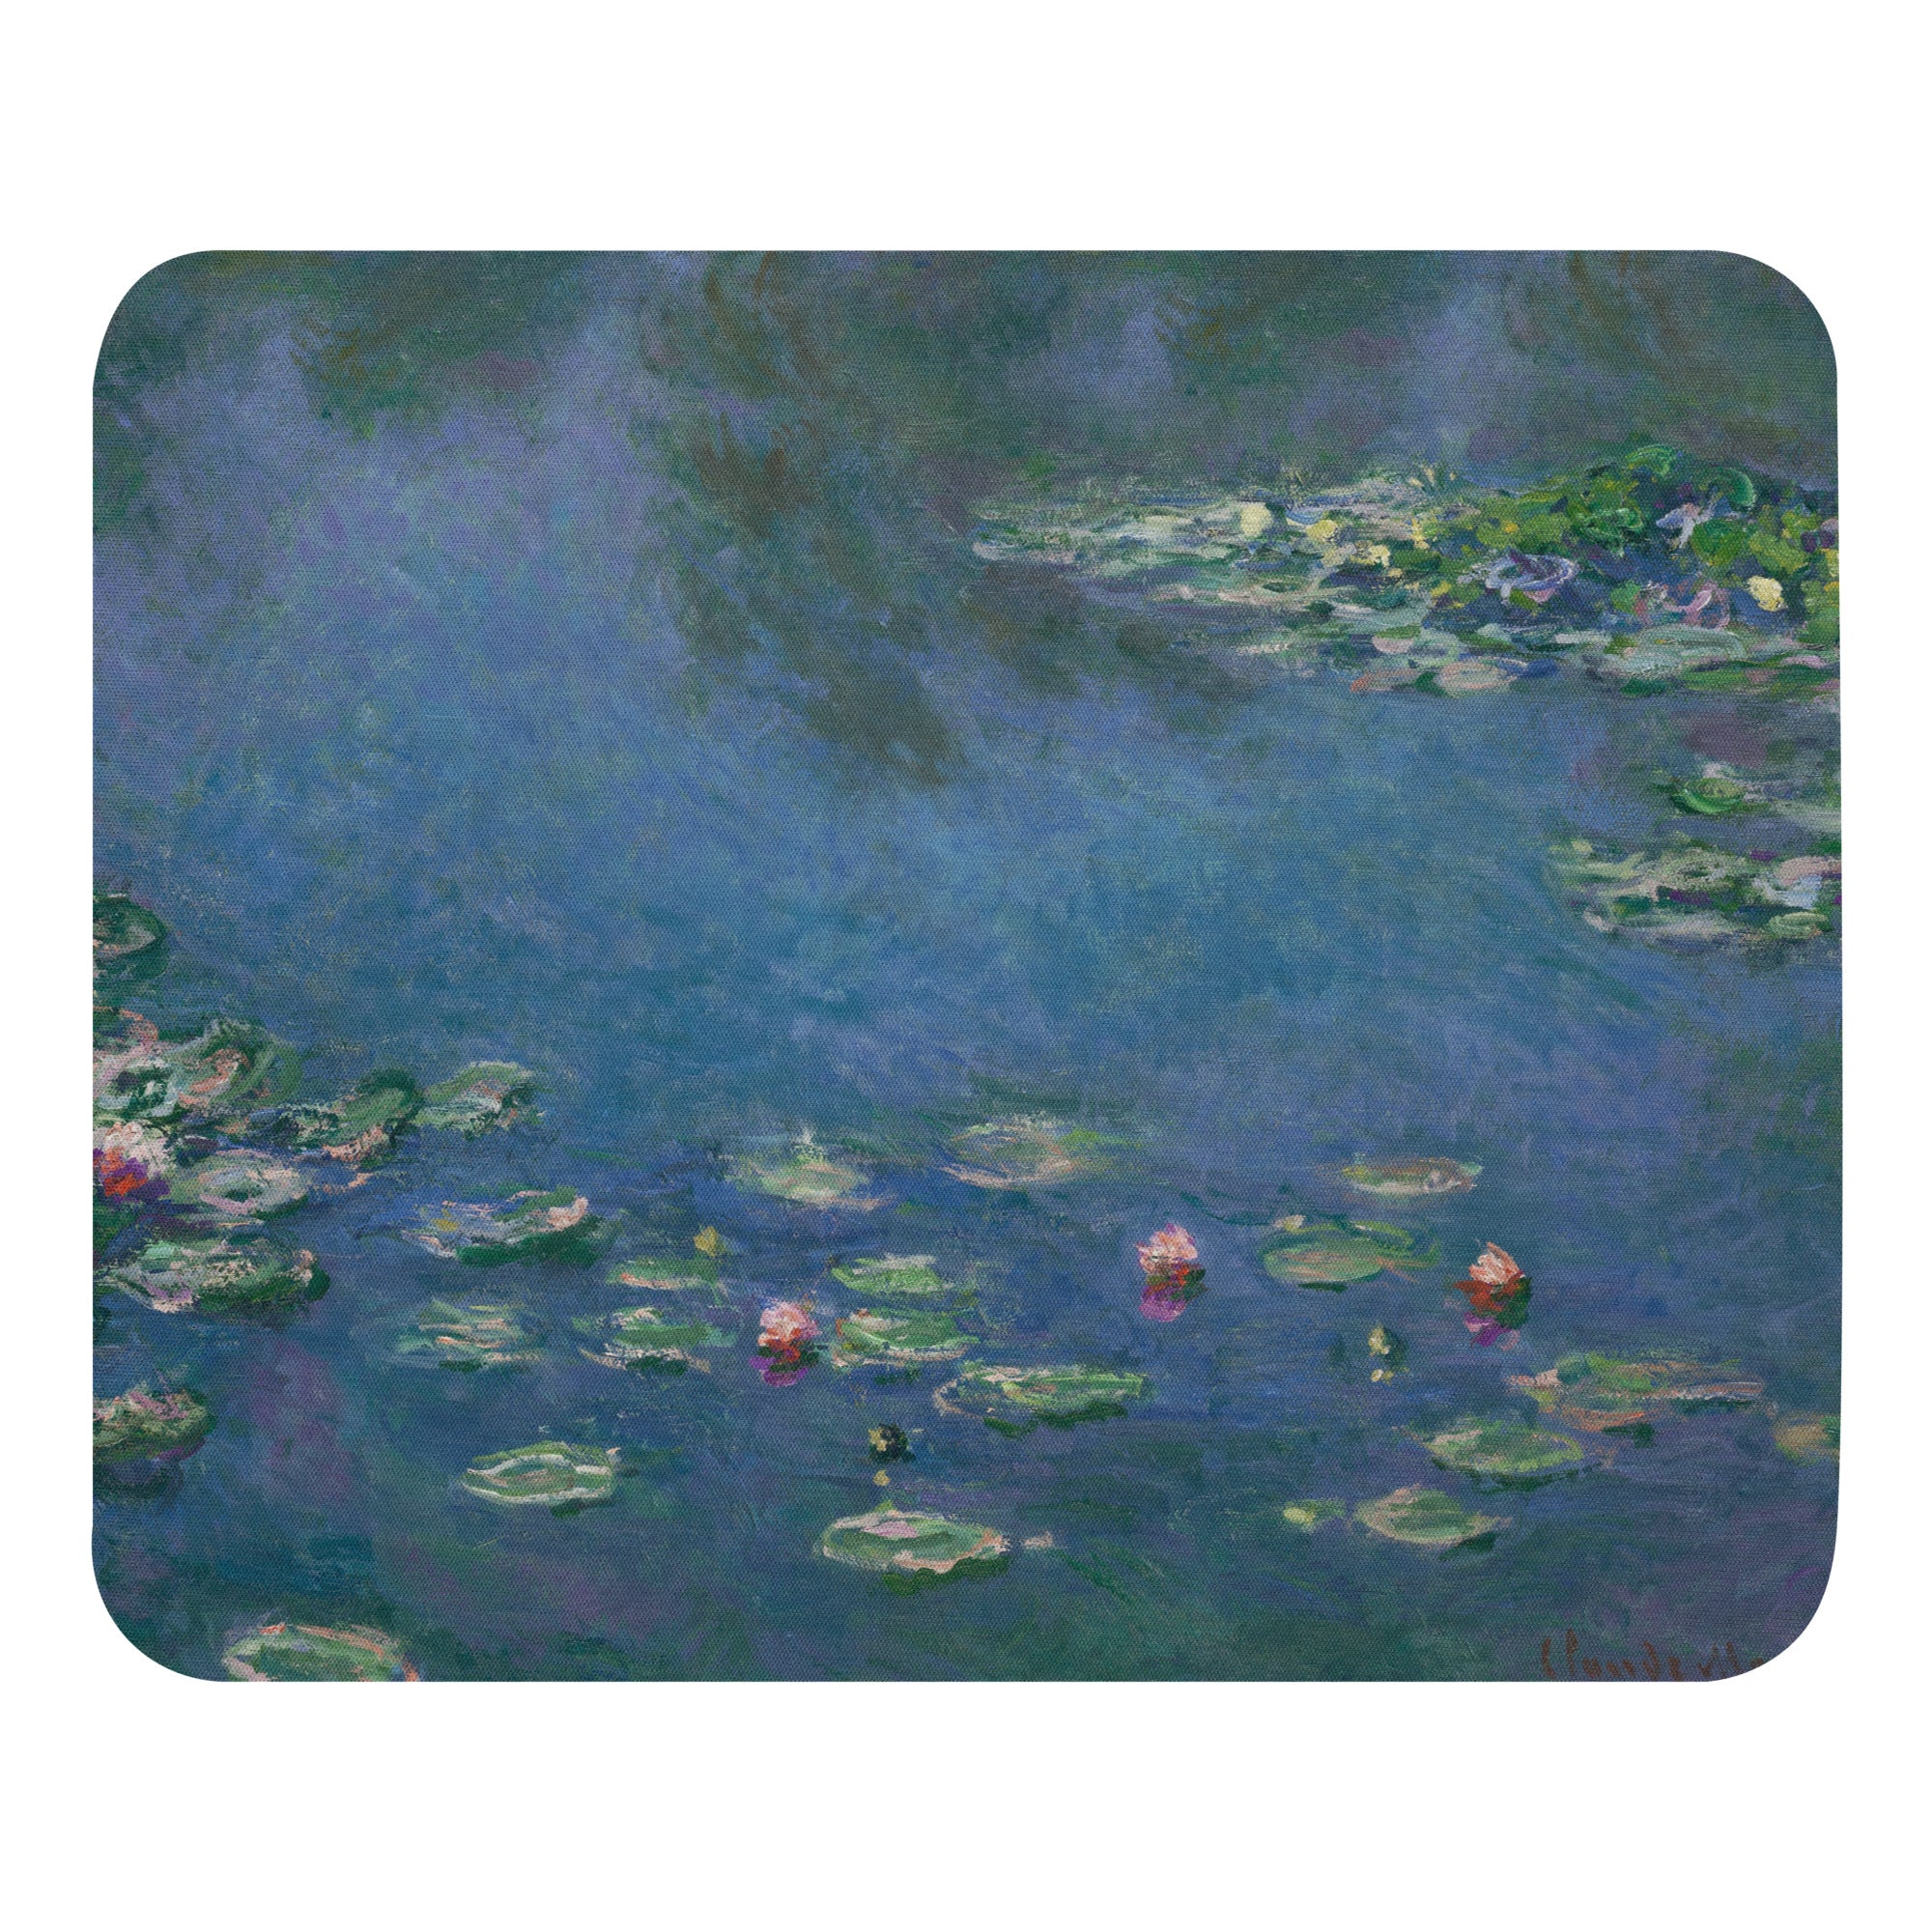 Claude Monet 'Water Lilies' Famous Painting Mouse Pad | Premium Art Mouse Pad